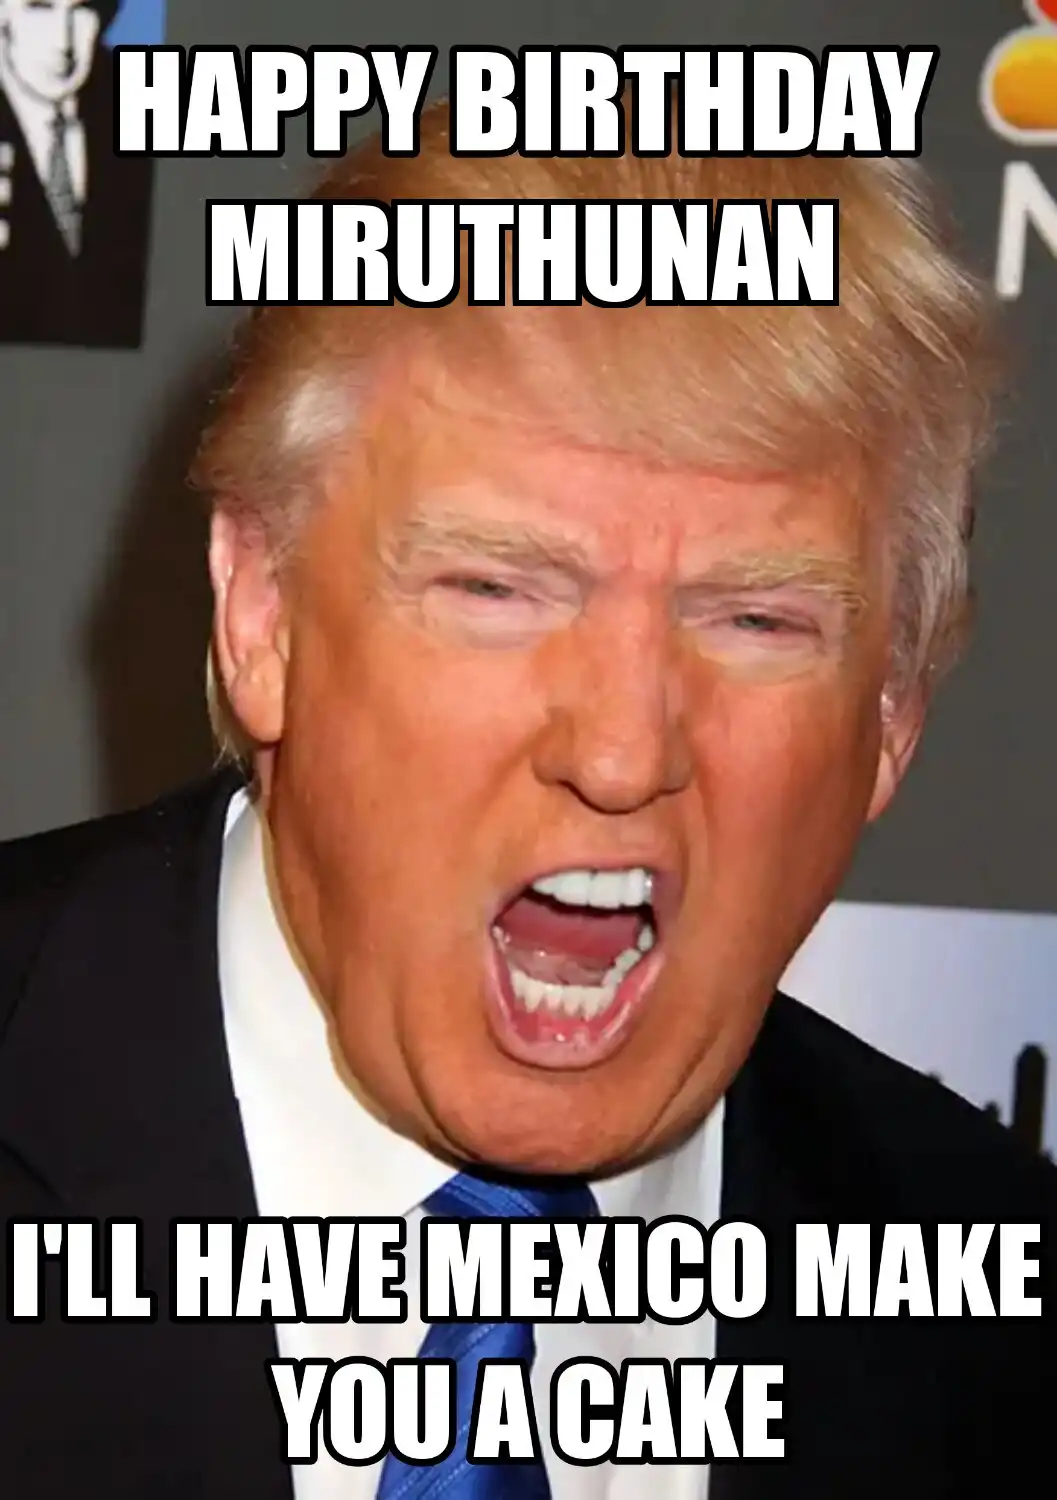 Happy Birthday Miruthunan Mexico Make You A Cake Meme